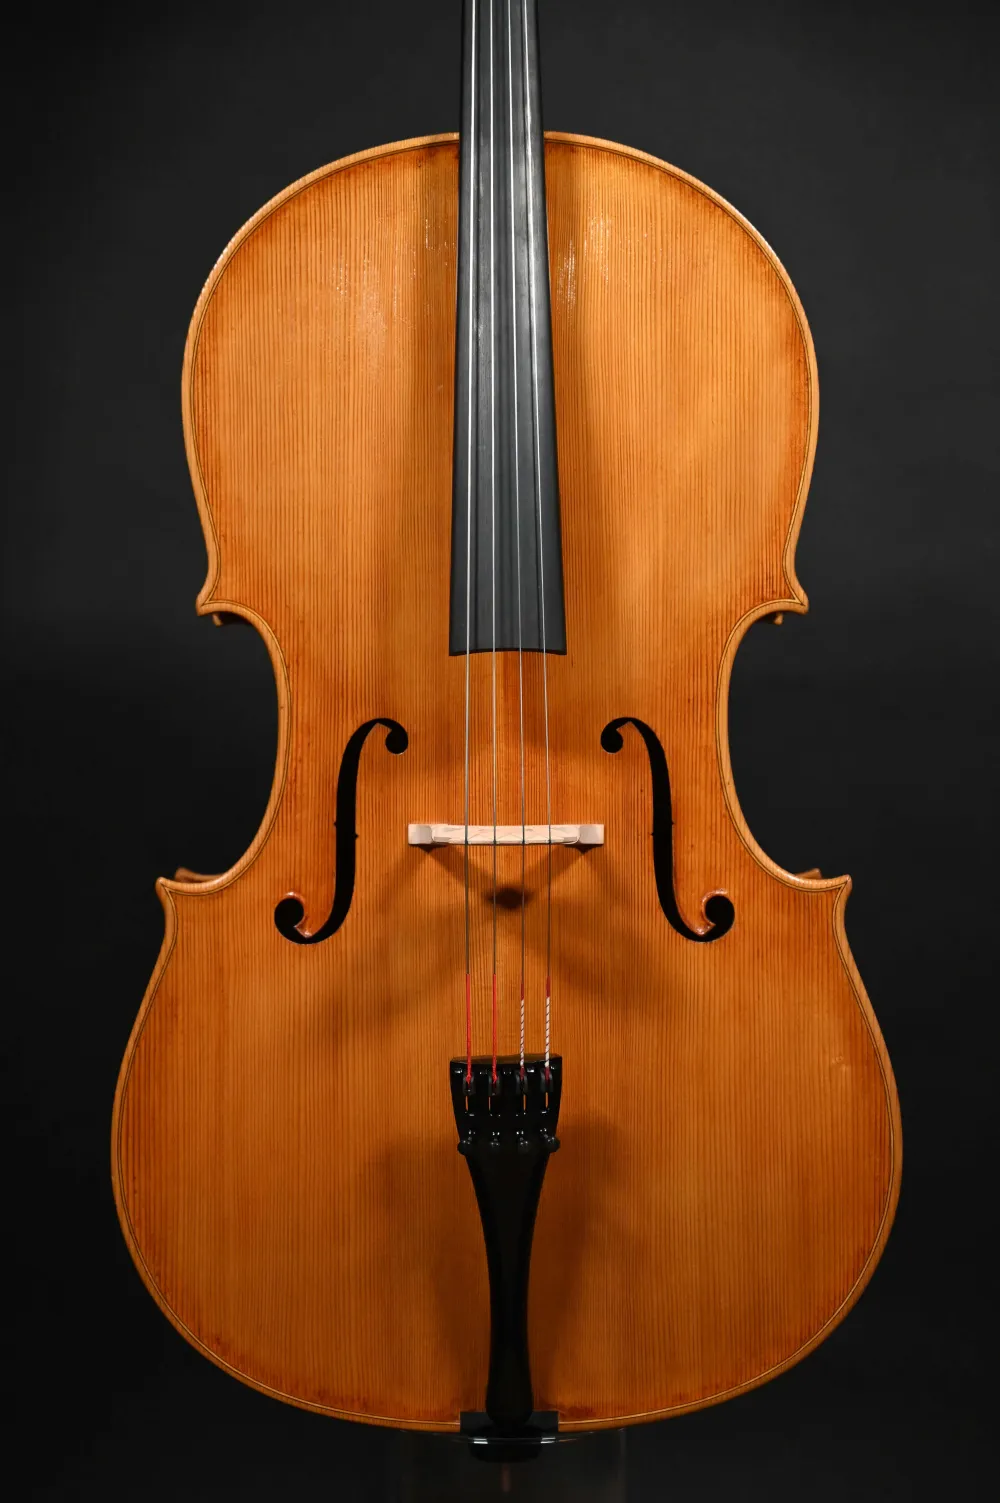 Deckenansicht eines Kalas Csaba "Caribbean" 4/4 Meister Cello (Violoncello) nach Montagnana "Sleeping Beauty" Handarbeit 2022